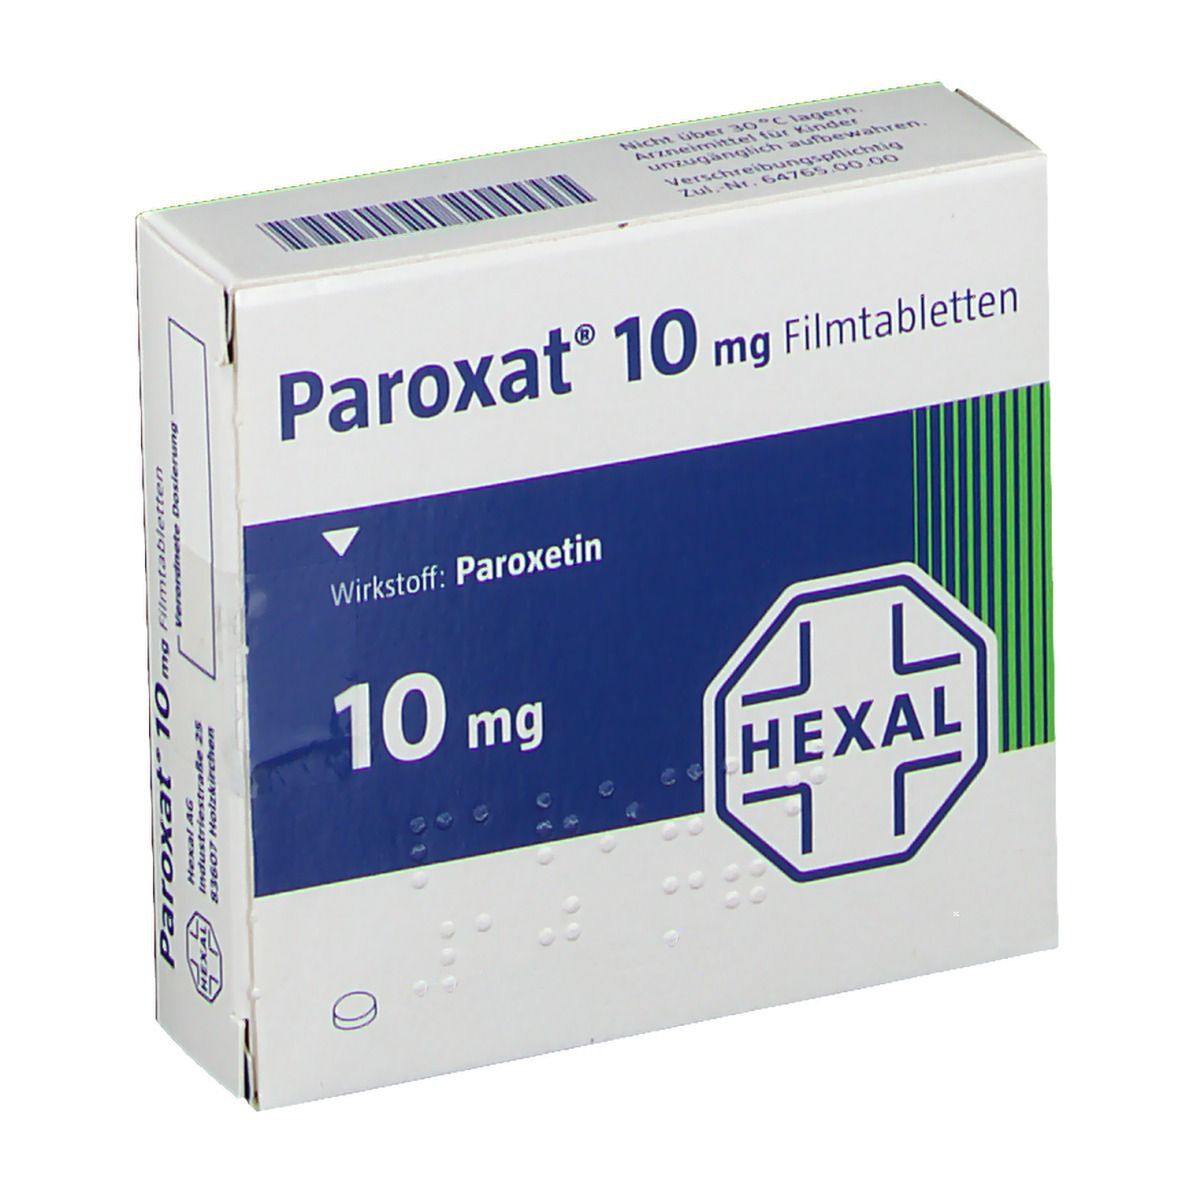 Paroxat® 10 mg